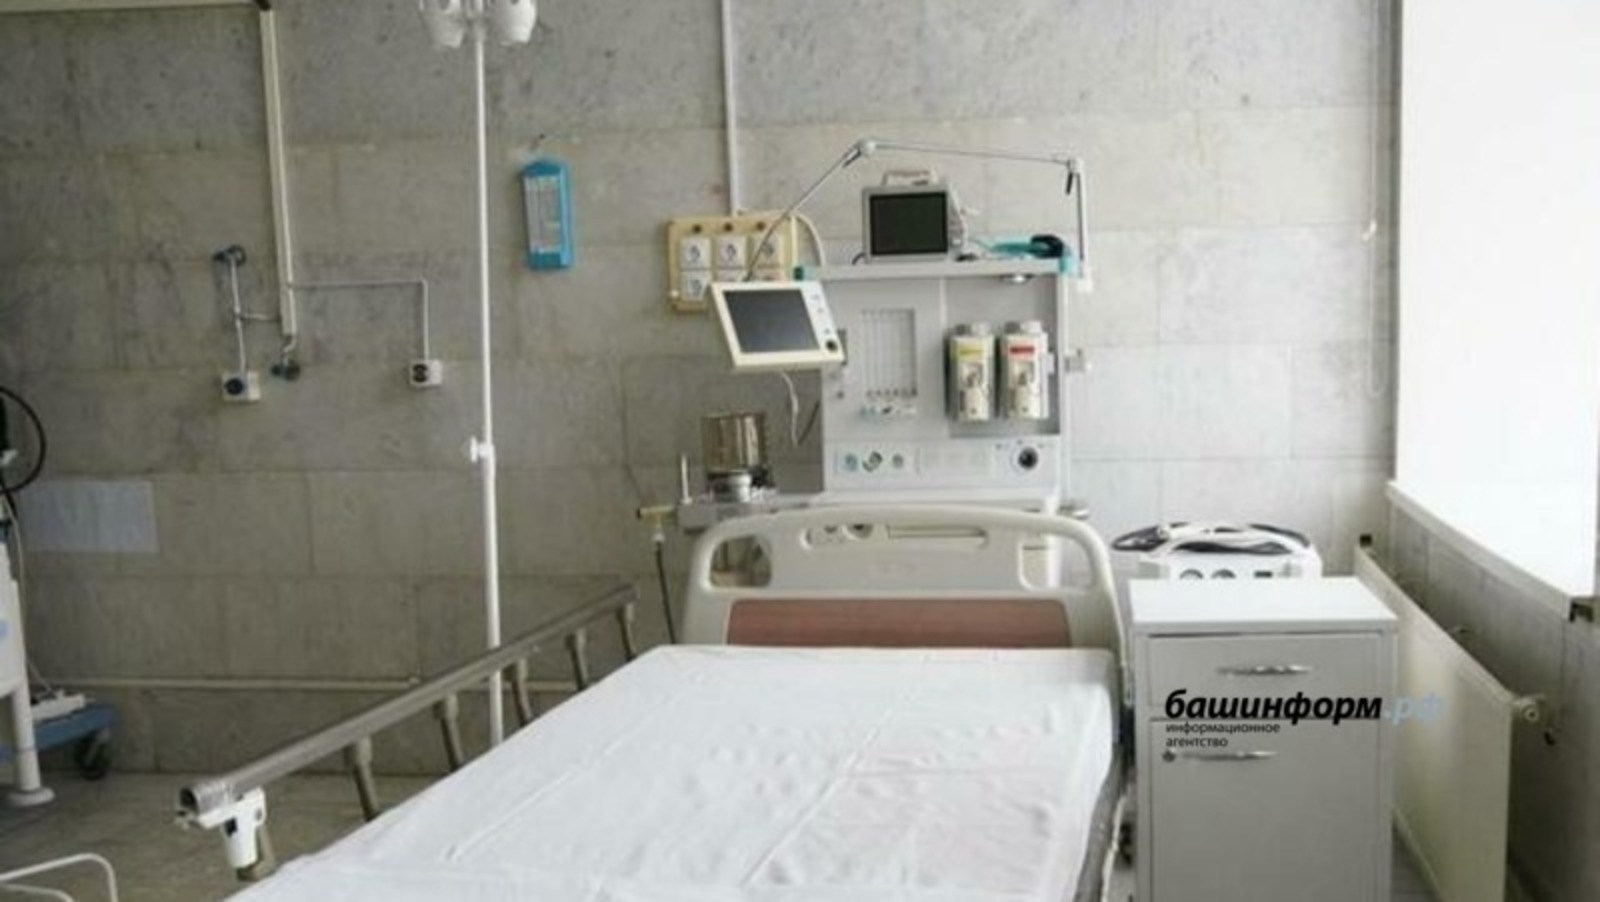 Ковид-госпиталдәргә тәүлегенә 77 тонна медицина кислороды кәрәк